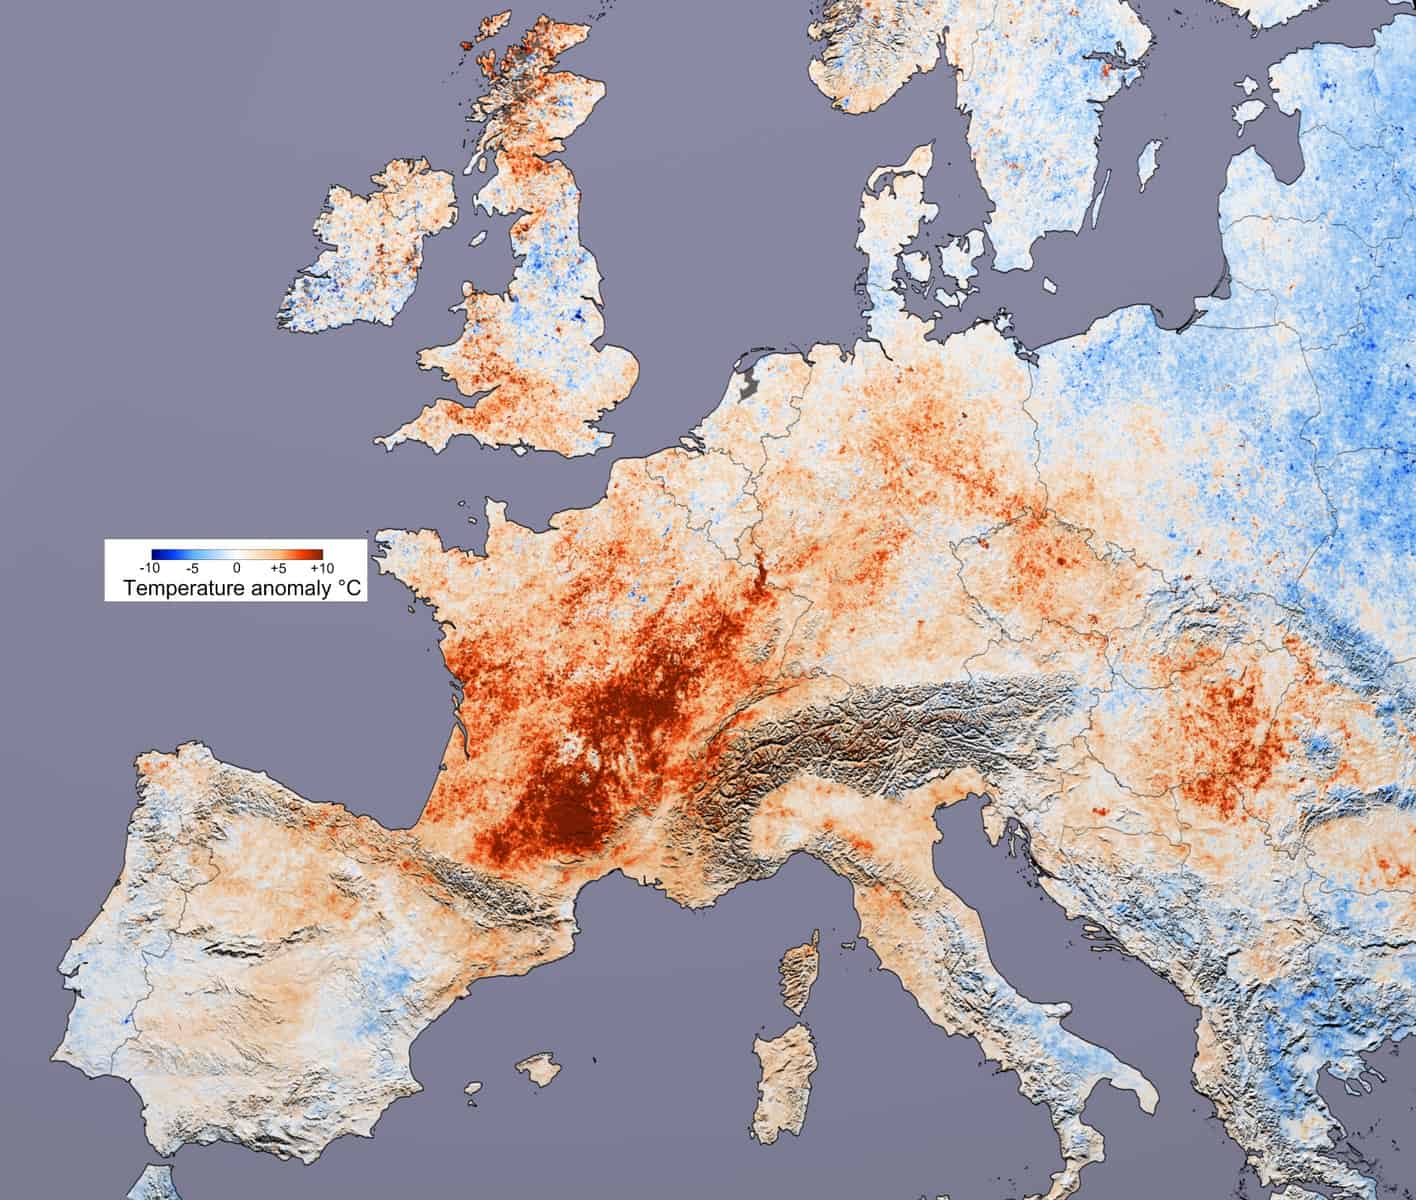 Image courtesy Reto Stockli and Robert Simmon, based upon data provided by the MODIS Land Science Team. NASA, 2003.